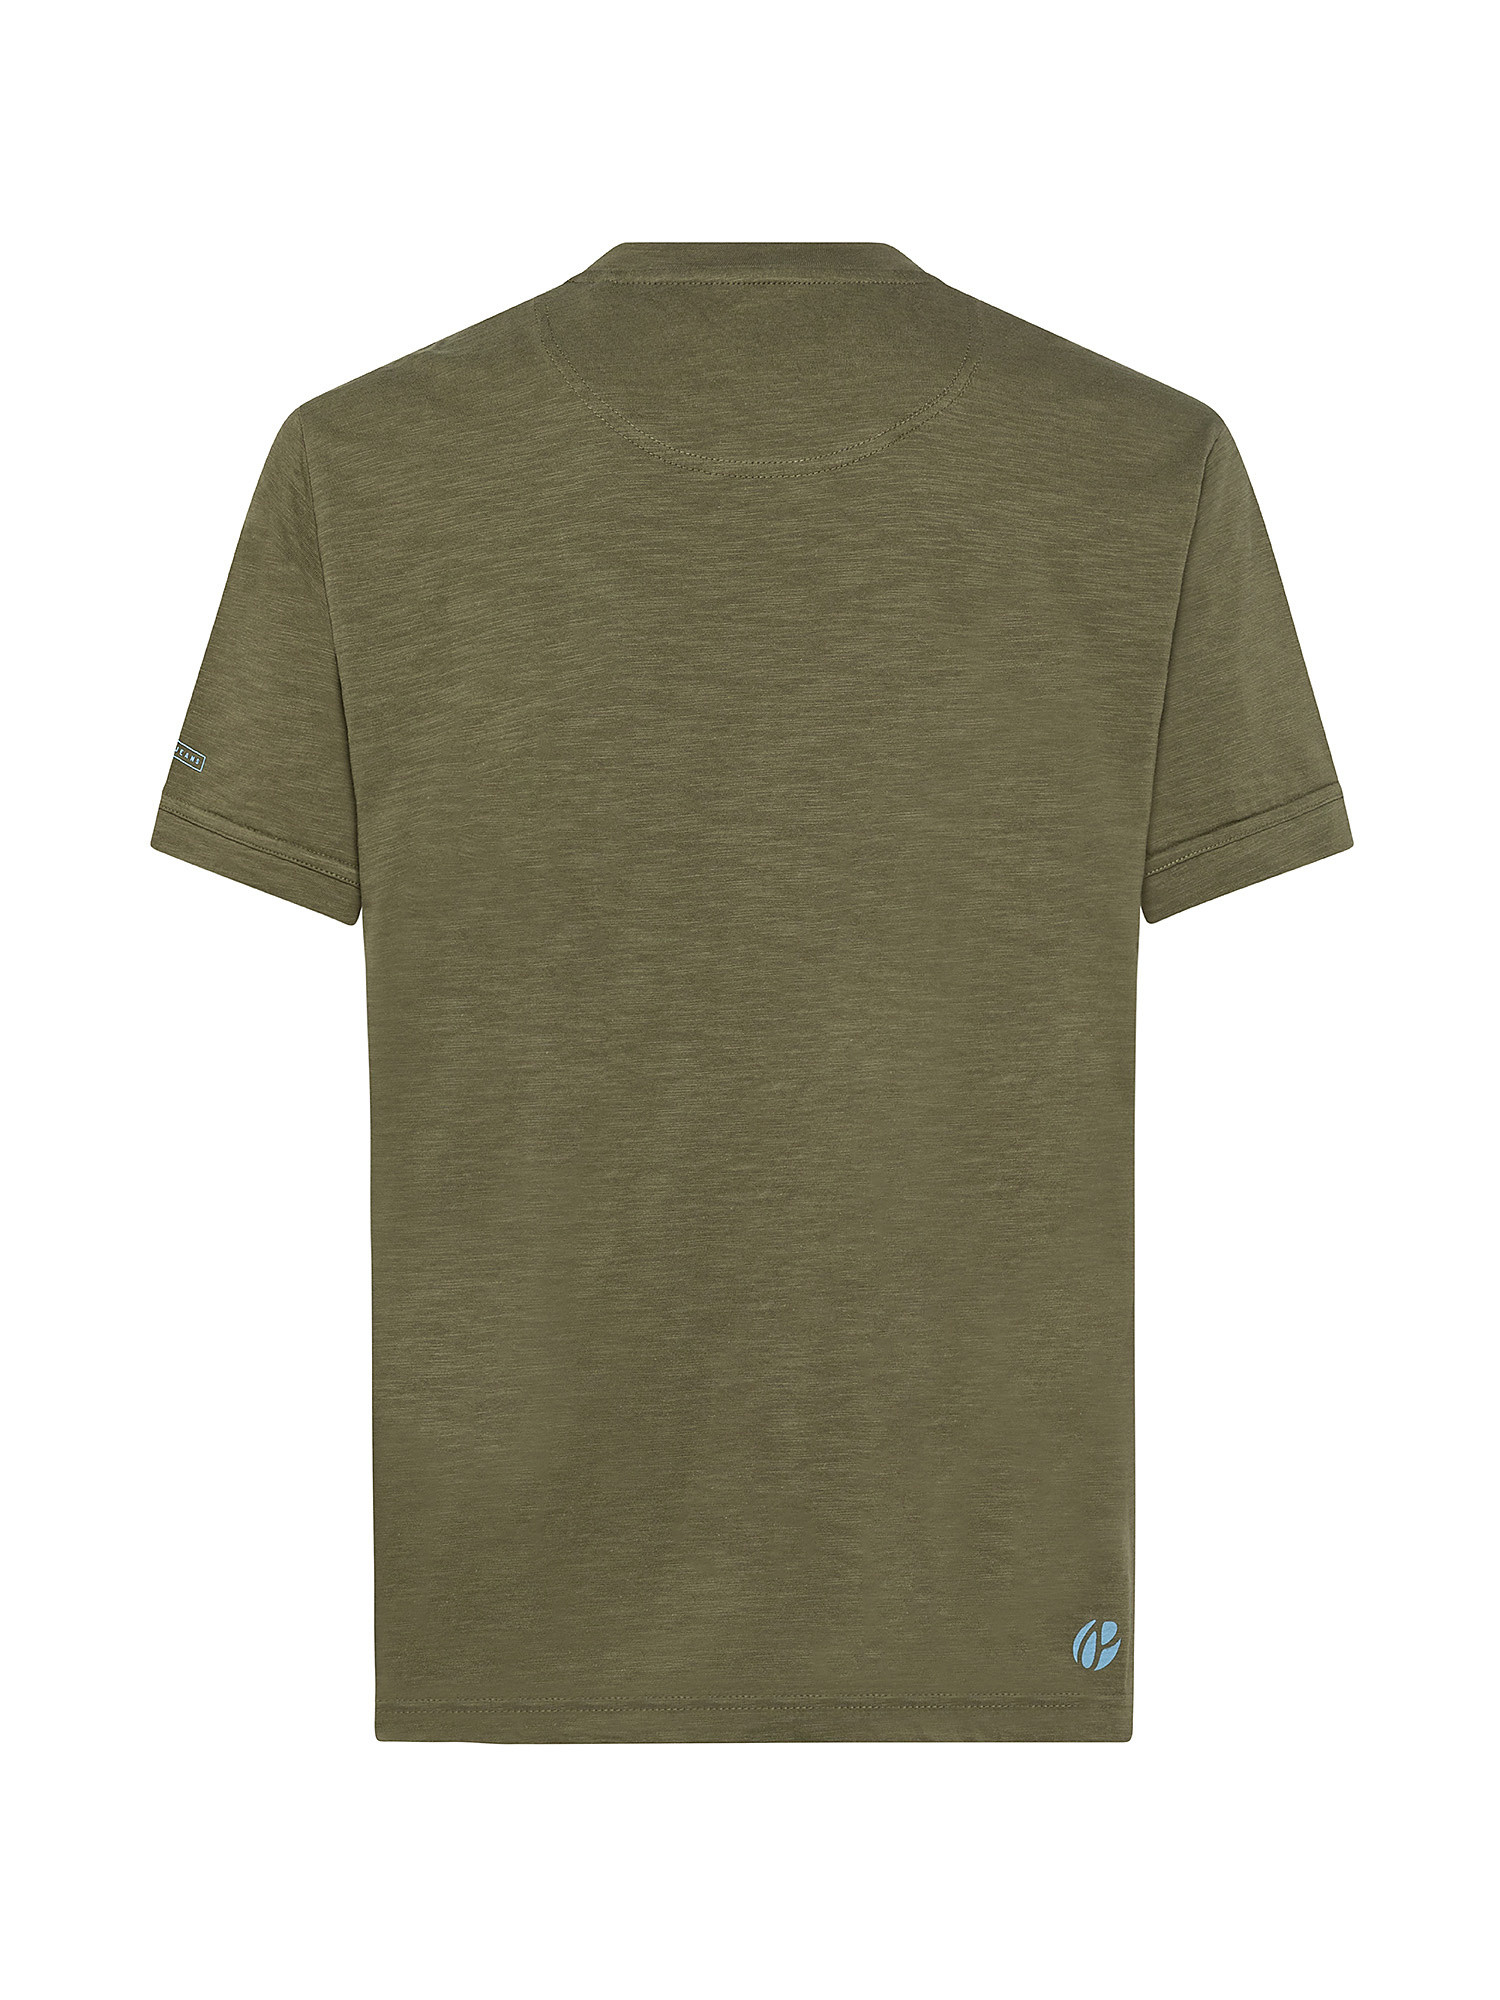 T-shirt con stampa a quadri aldarian, Verde, large image number 1